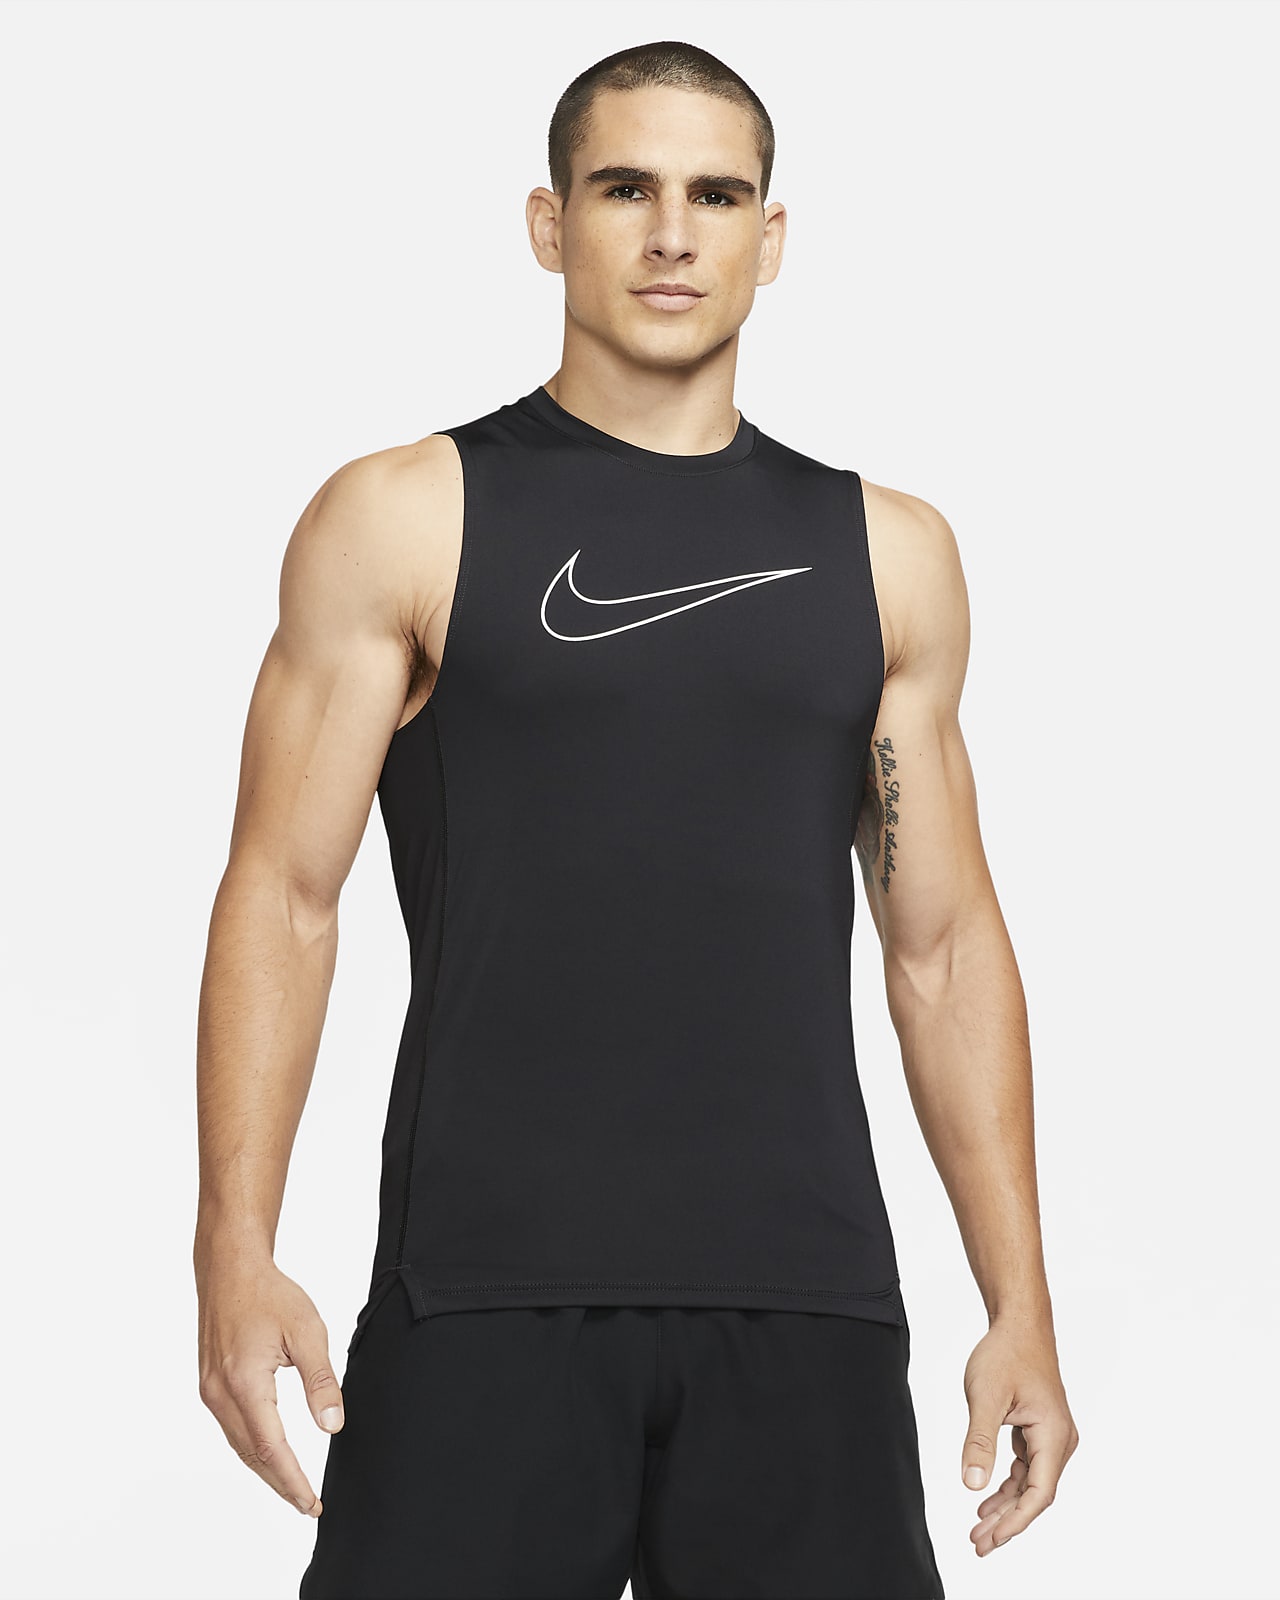 Camiseta sinmangas y ajuste slim para hombre Nike Dri-FIT. Nike.com